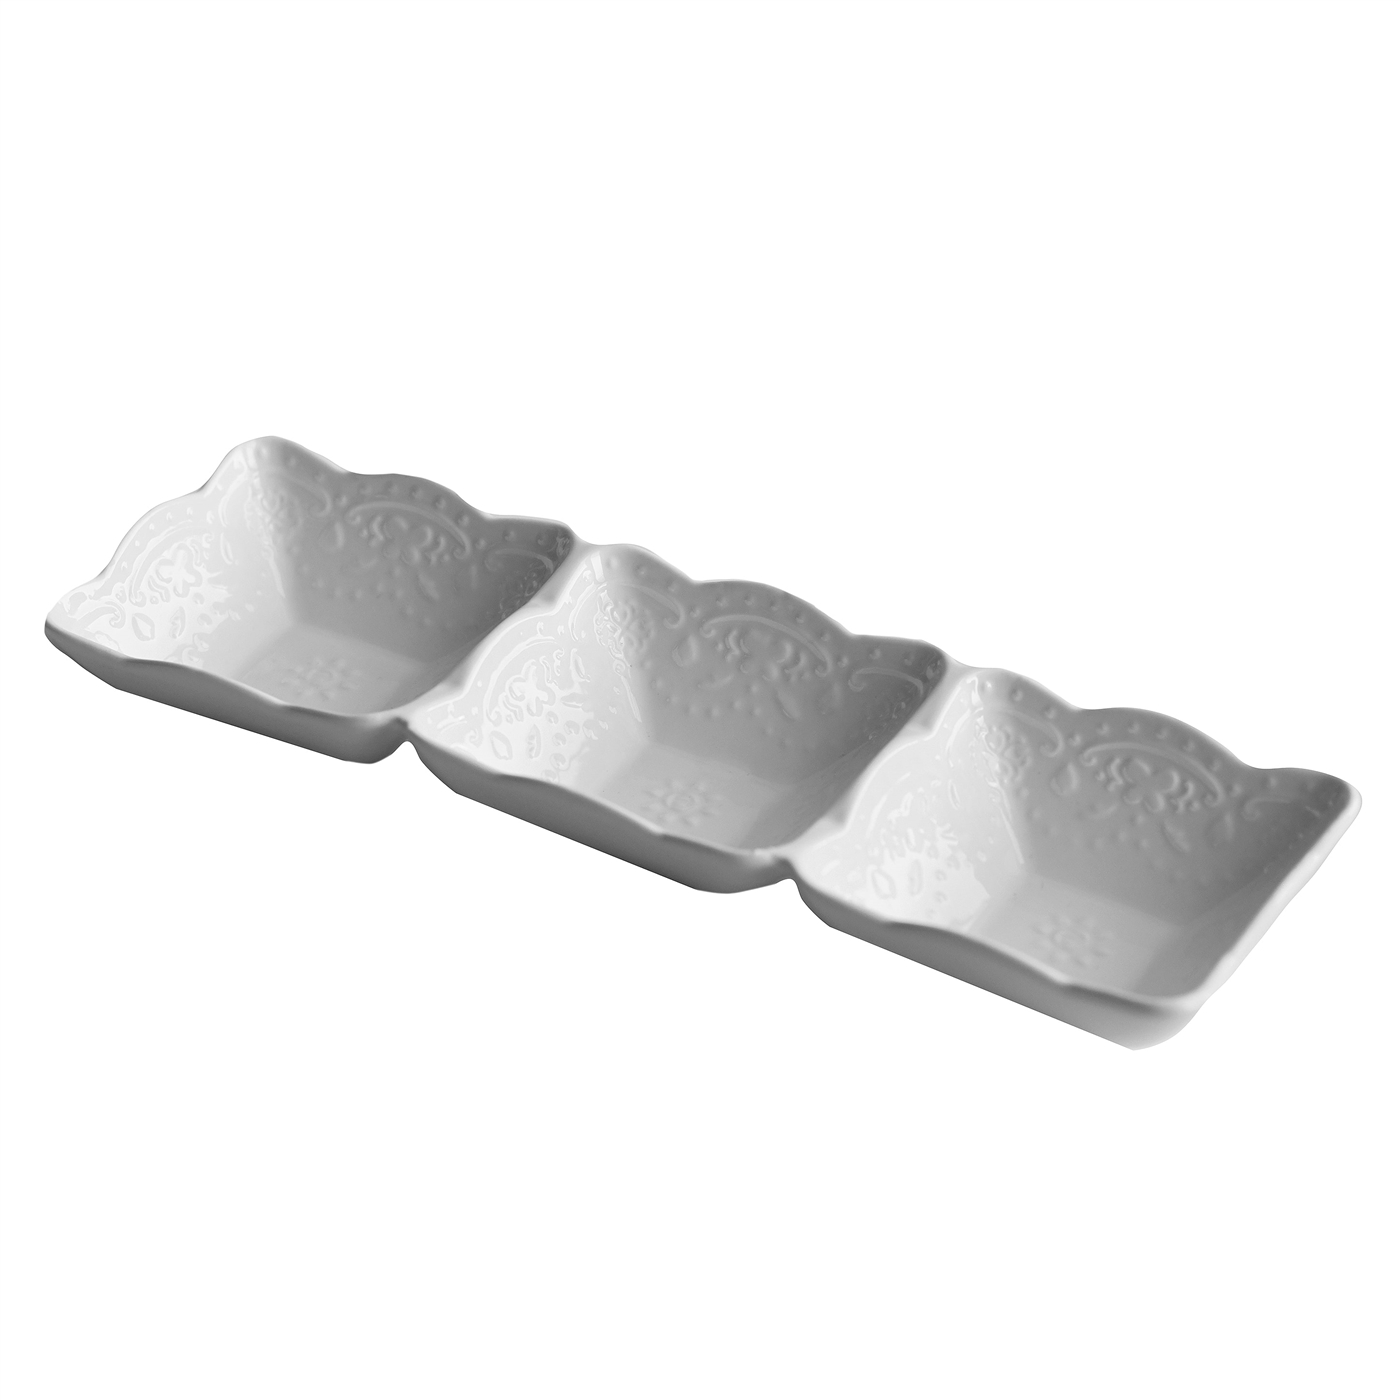 White 3 Section Ceramic Dish #5283